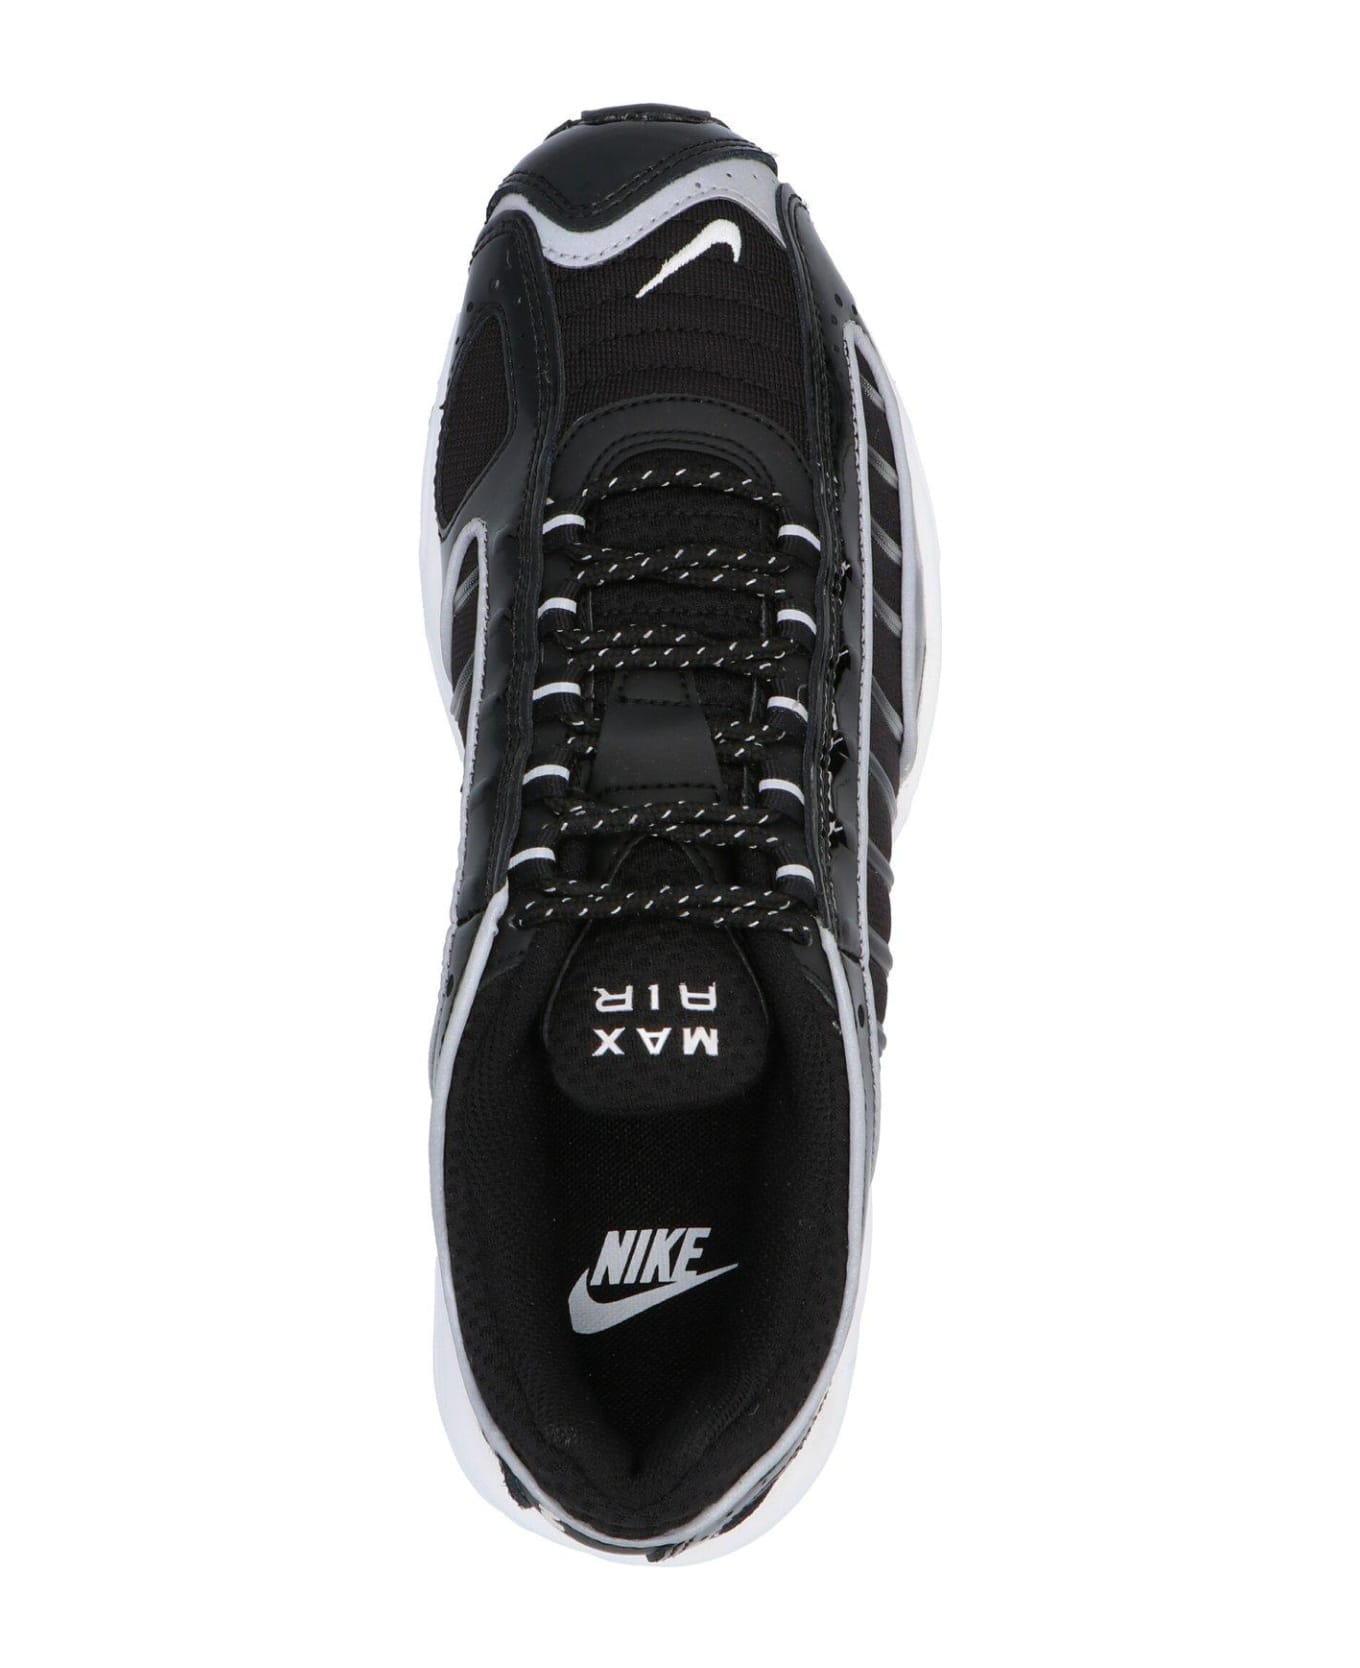 Nike Air Max Tailwind Iv Sneakers - Black スニーカー